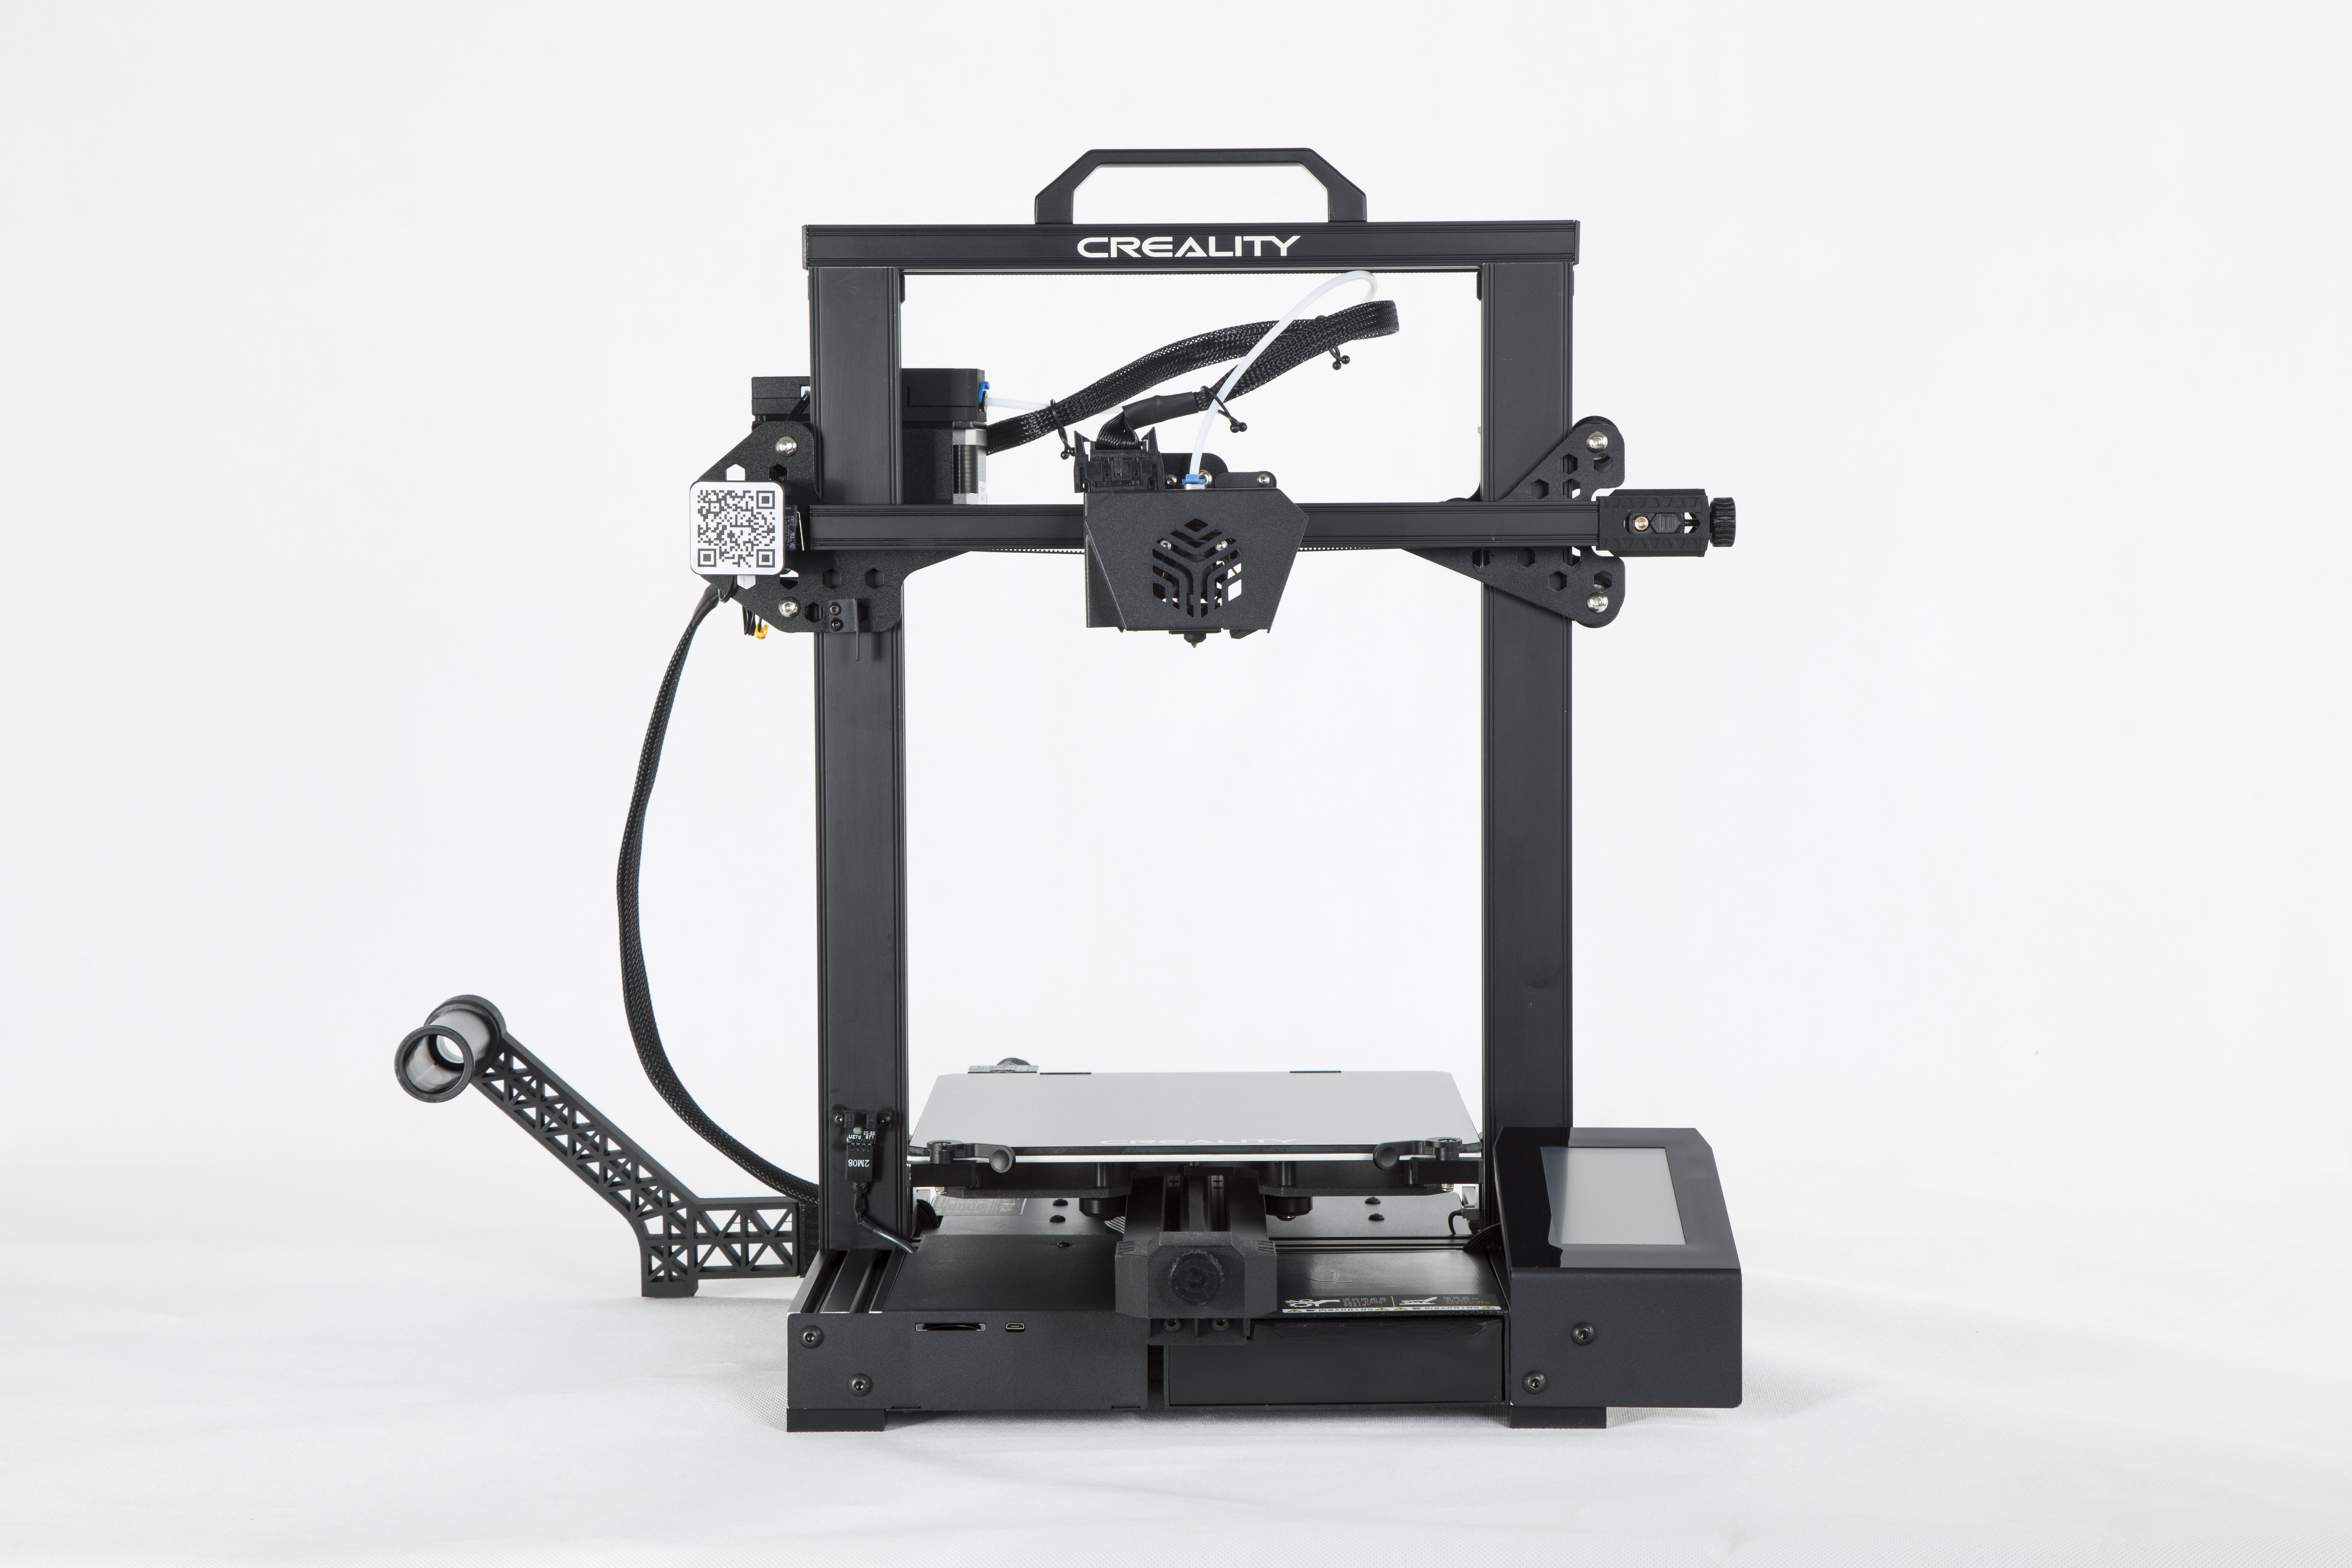 Creality's CR6-SE 3D printer (pictured) has gained $4.3 million worth of backing via Kickstarter. Image via Creality.